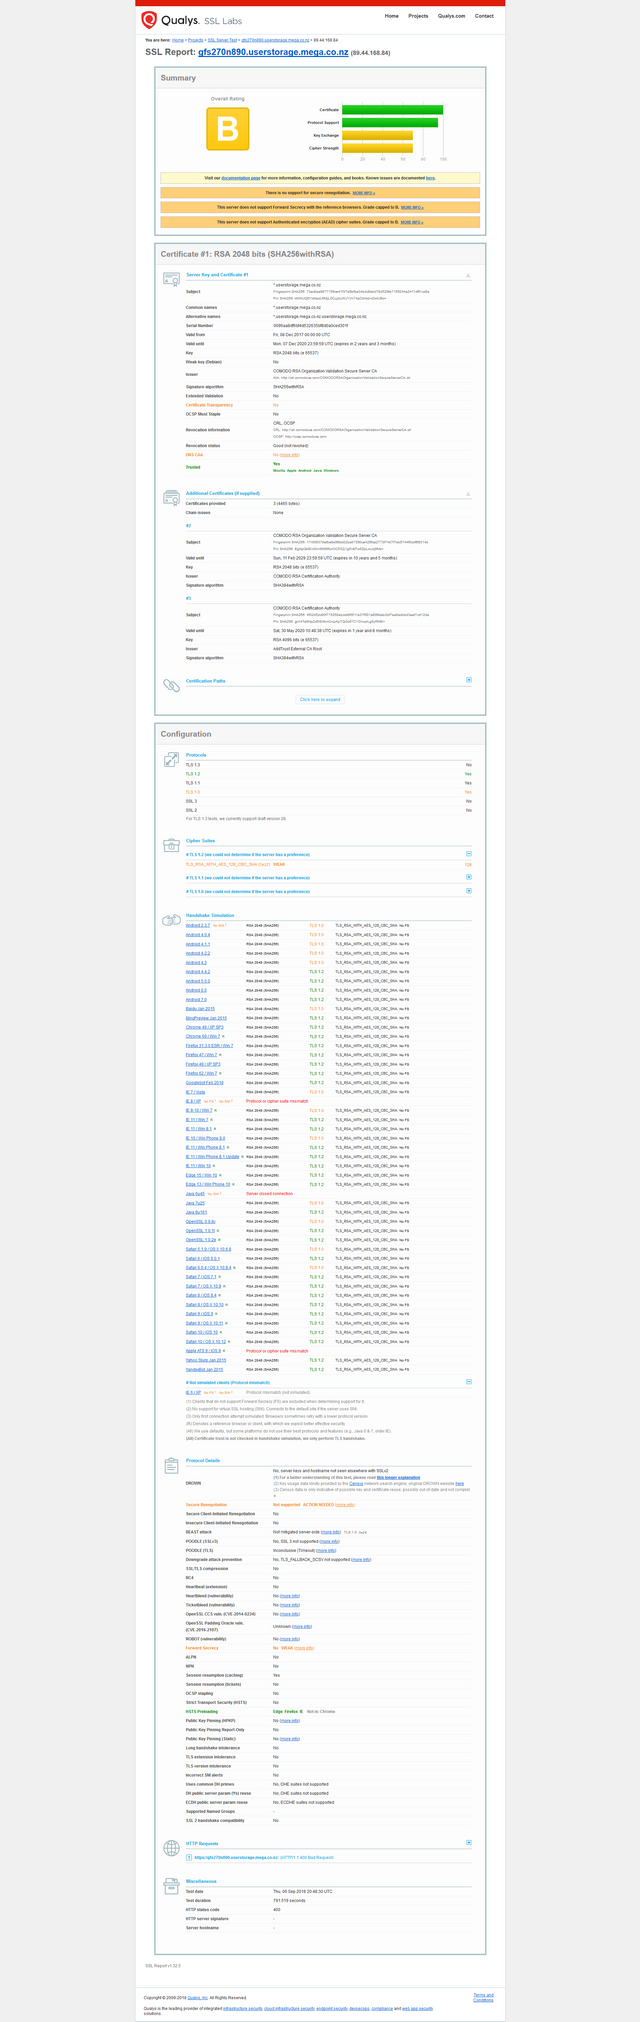 Screenshot_2018-09-06 SSL Server Test gfs270n890 userstorage mega co nz (Powered by Qualys SSL Labs).png